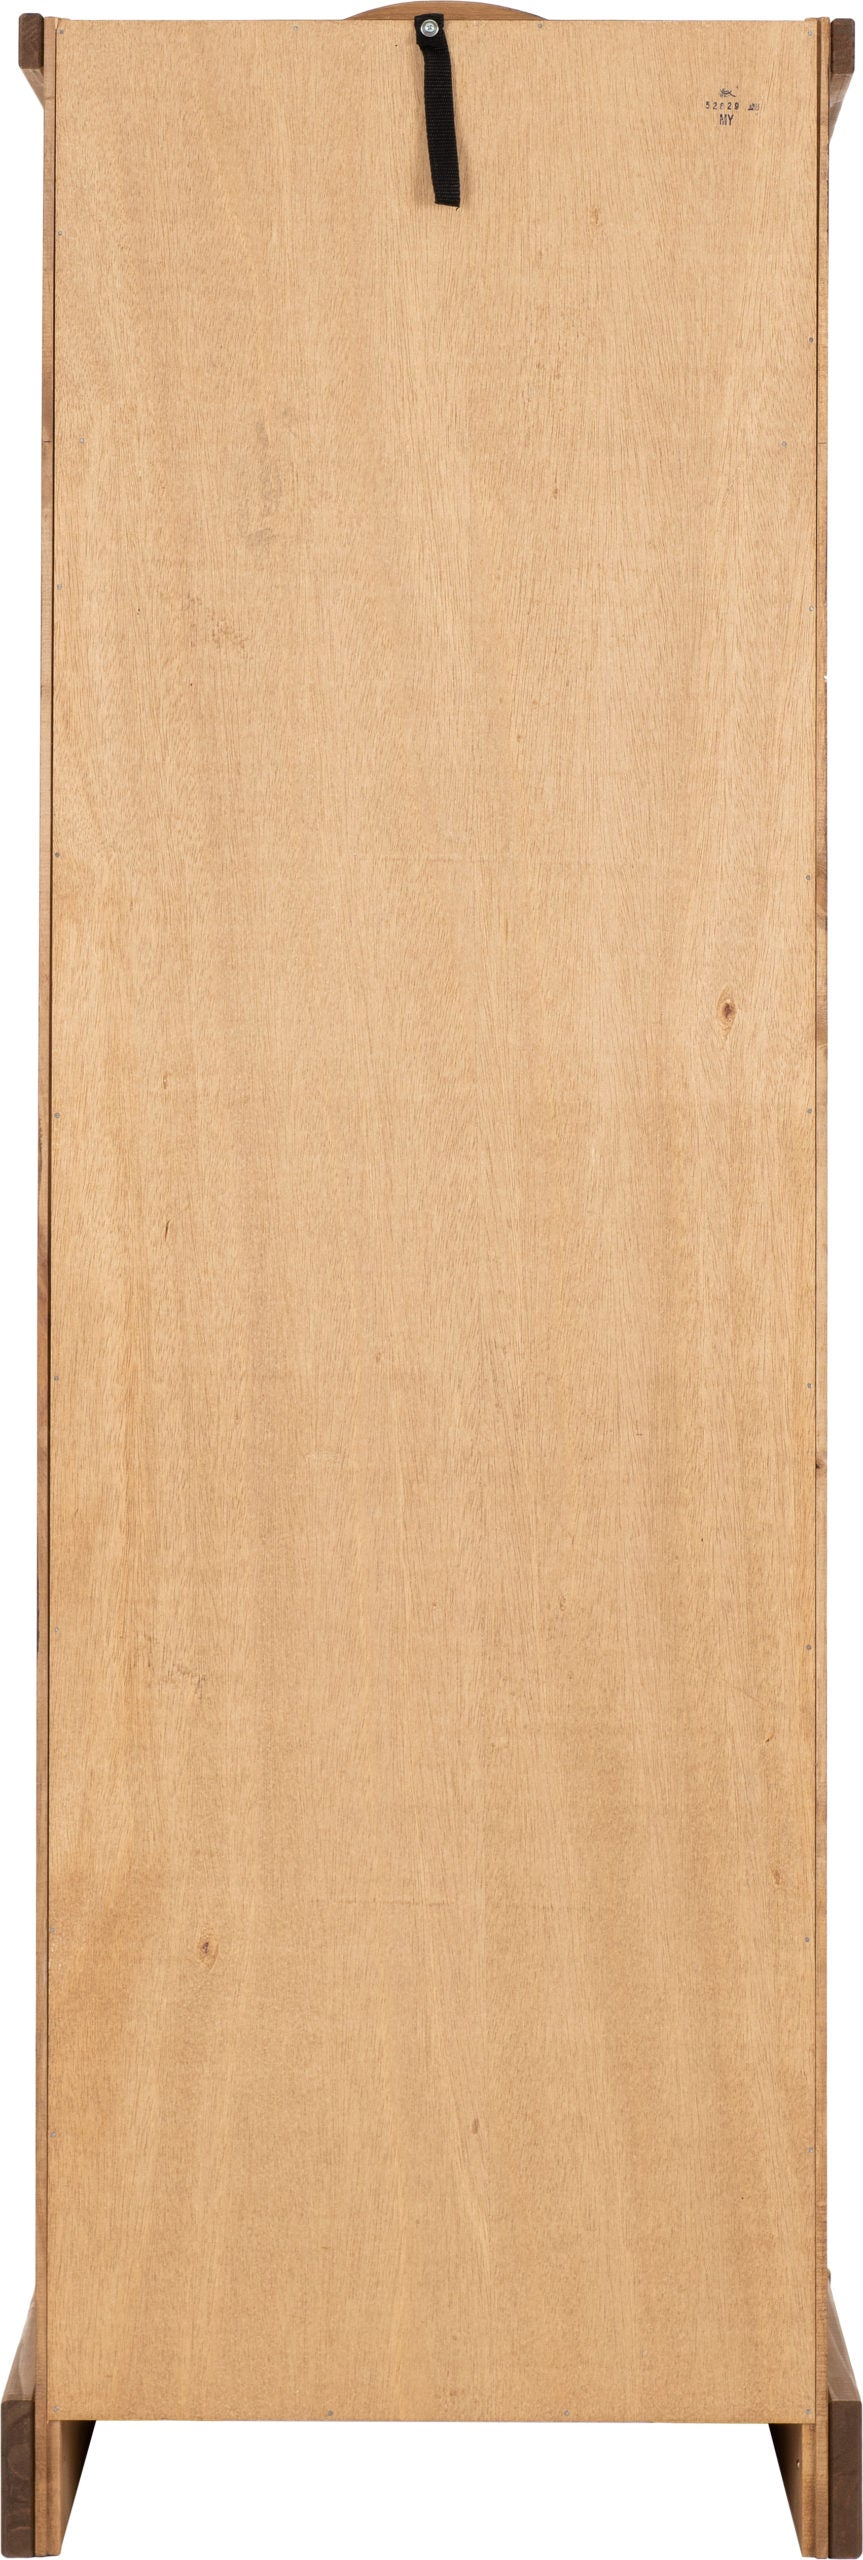 Corona 1 Door Single Wardrobe in Distressed Waxed Pine